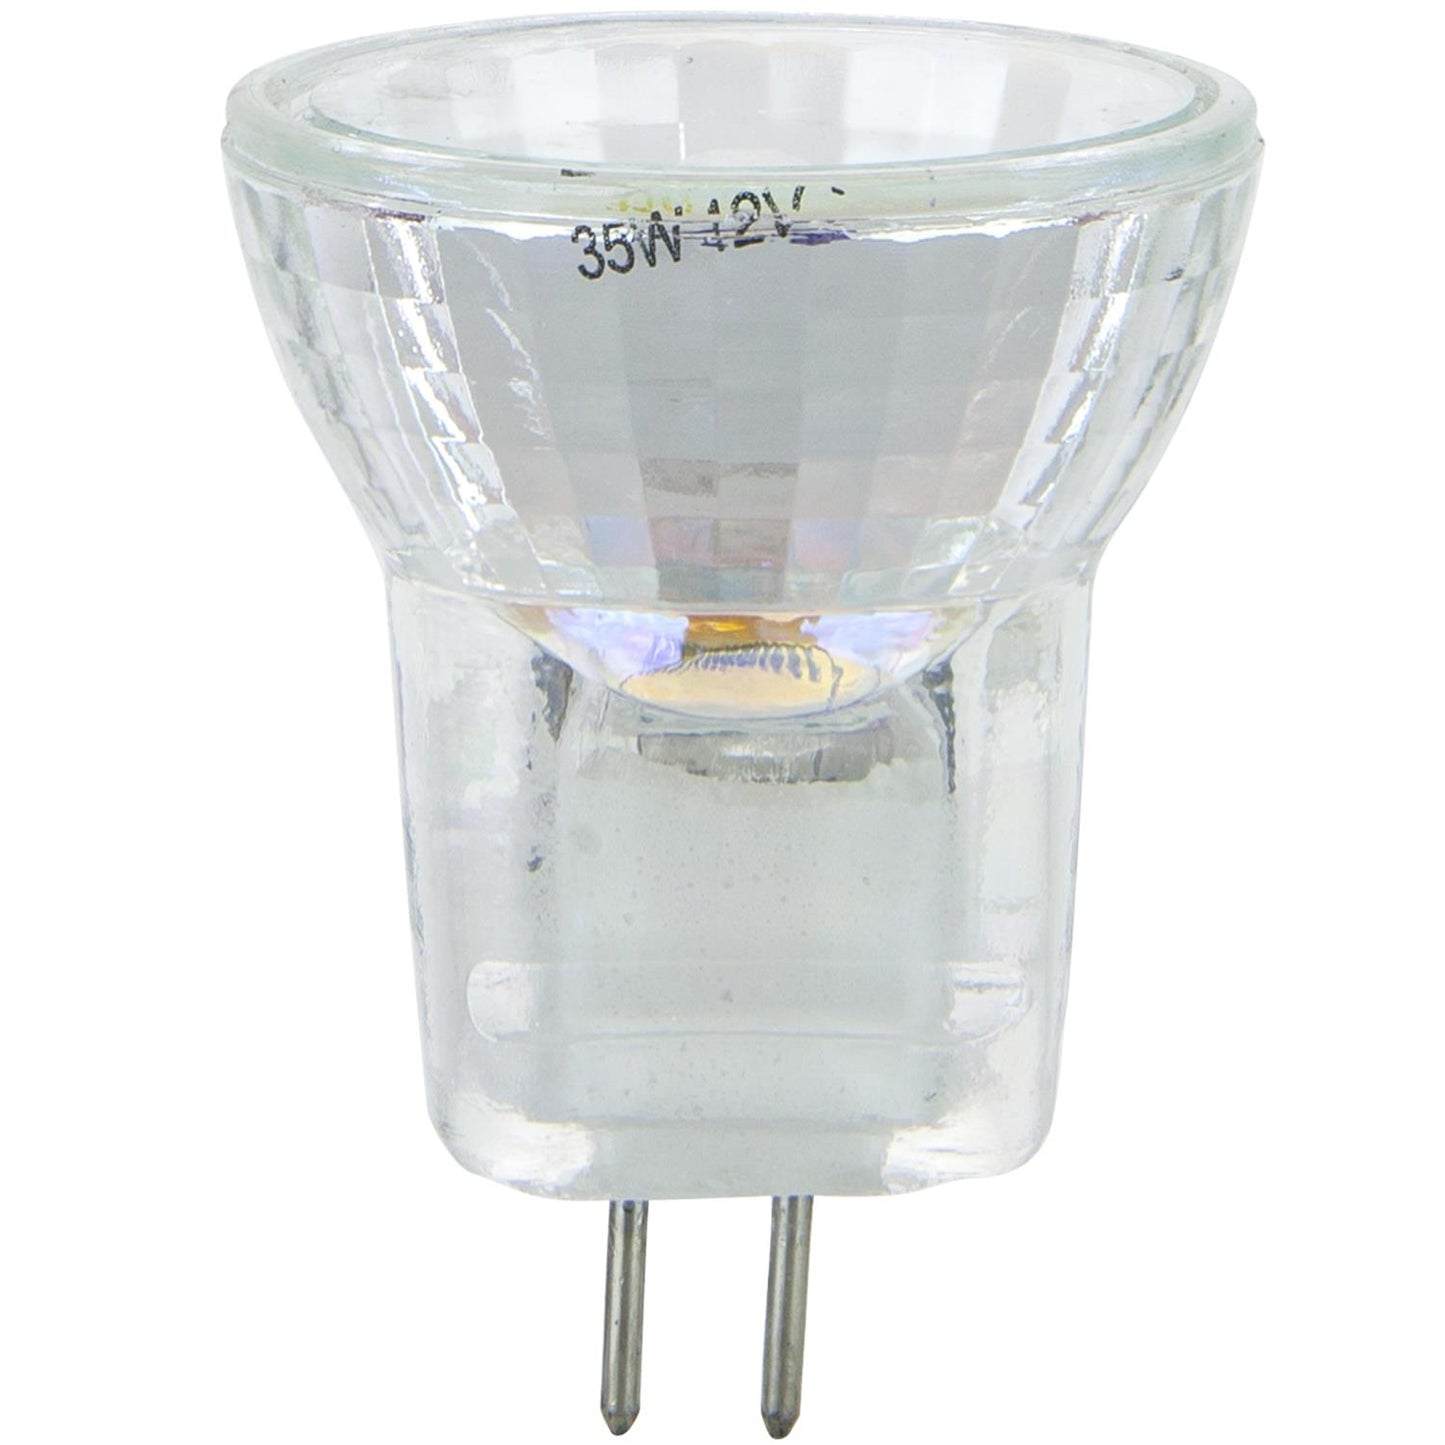 Sunlite 35 Watt, 10° Spot, MR8 Mini Reflector with Cover Guard, G4 Bi-Pin Base